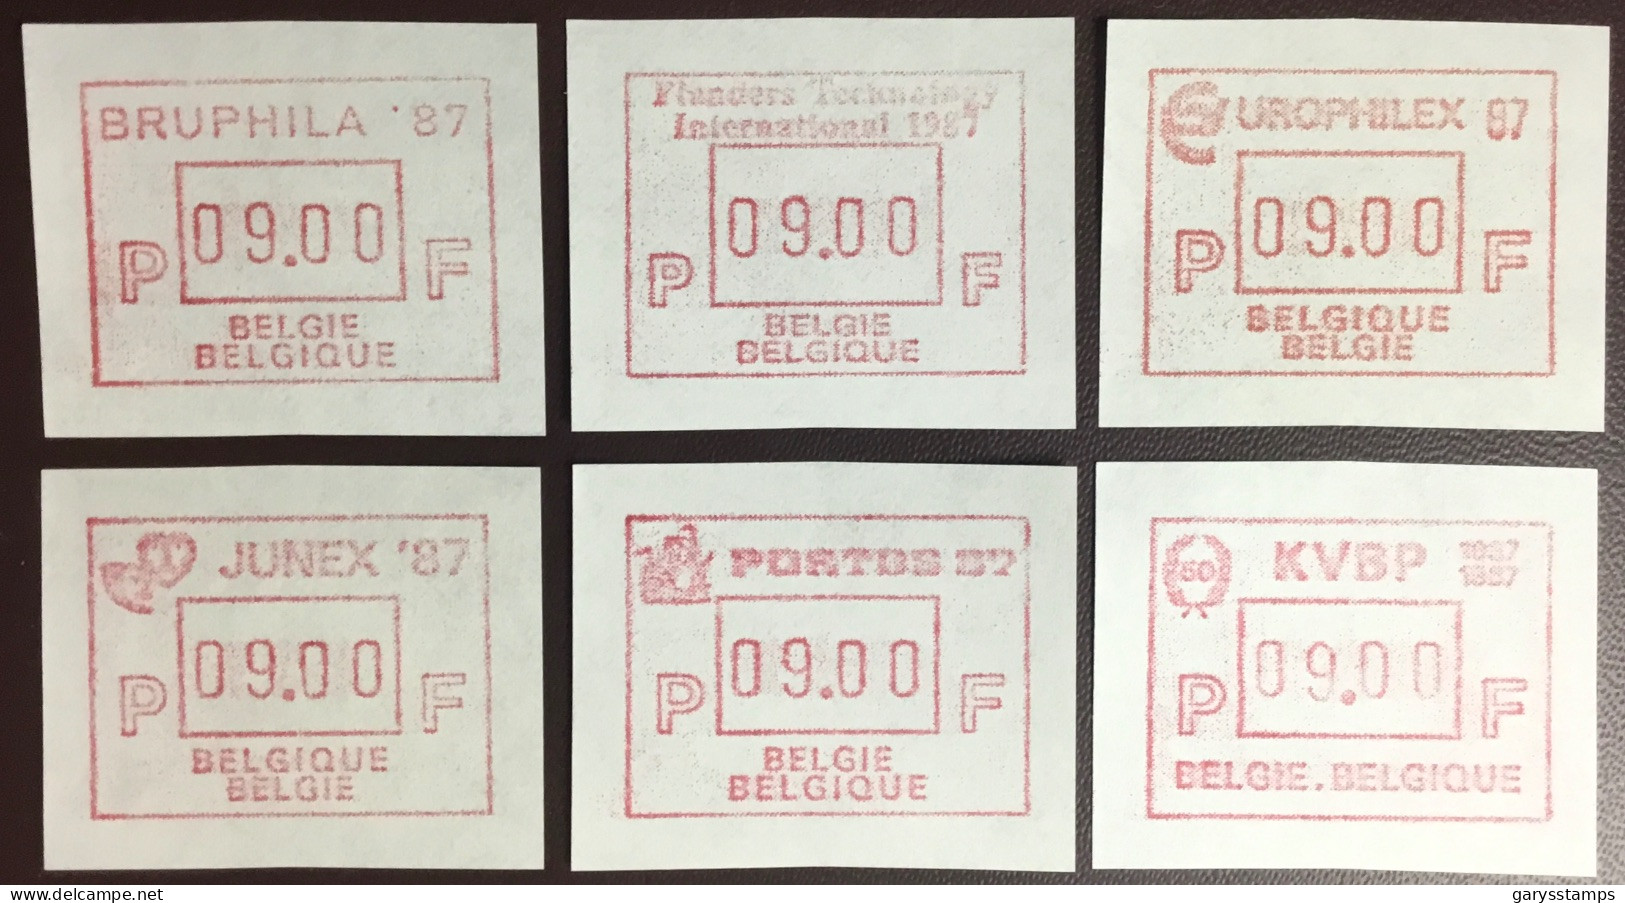 Belgium 1987 ATM Machine Stamps MNH - Nuovi